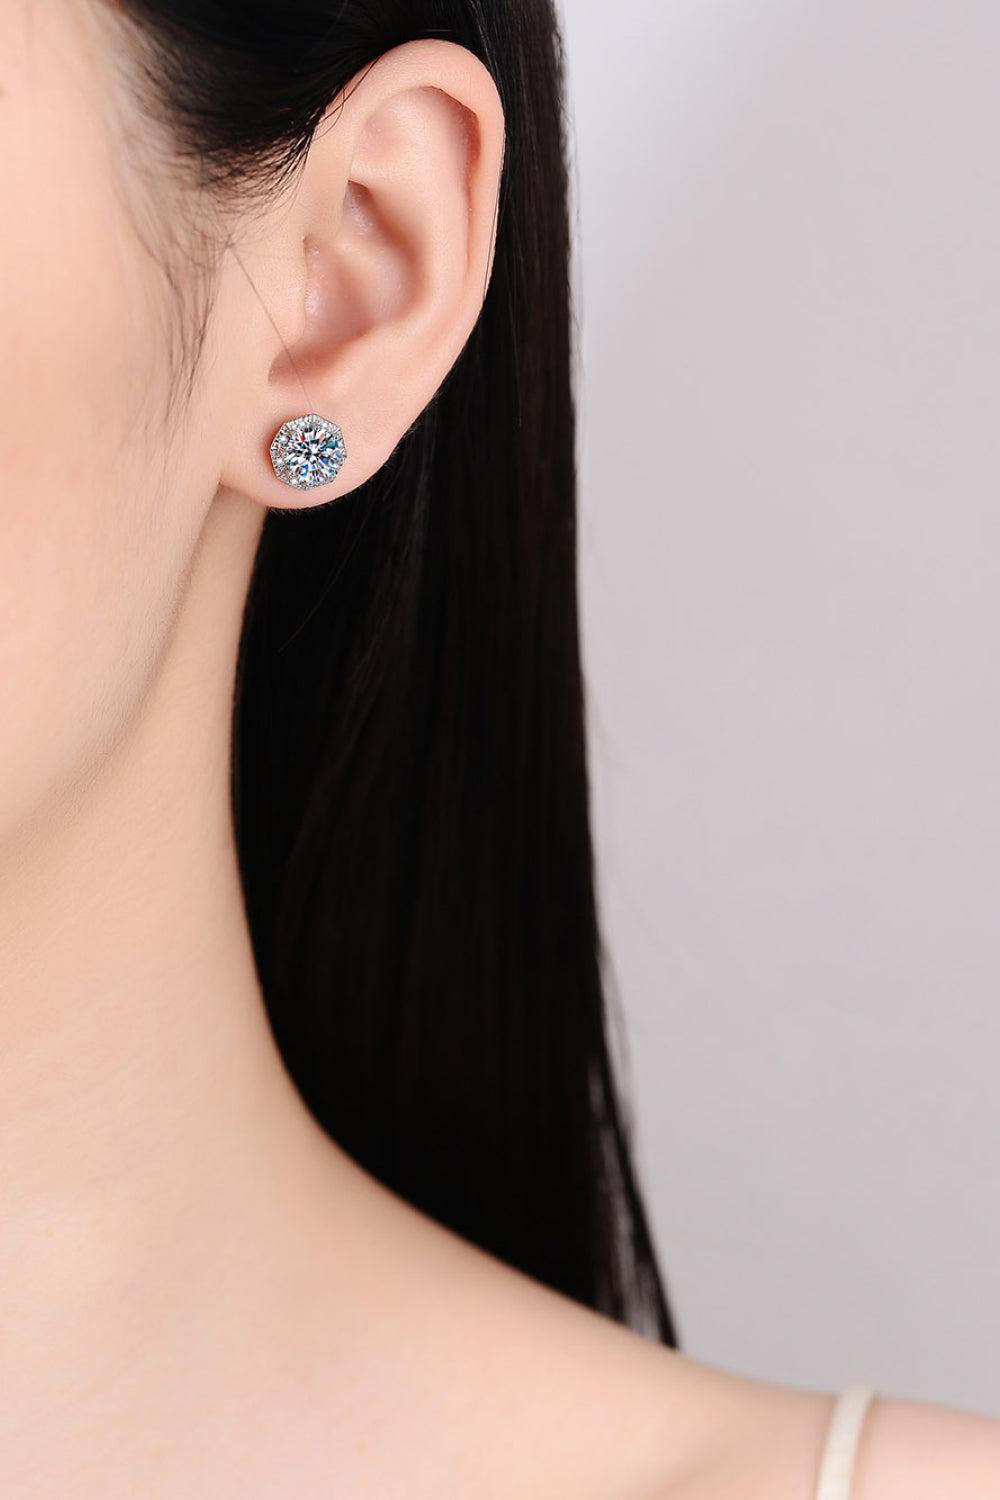 2 Carat Moissanite 925 Sterling Silver Stud Earrings BLUE ZONE PLANET